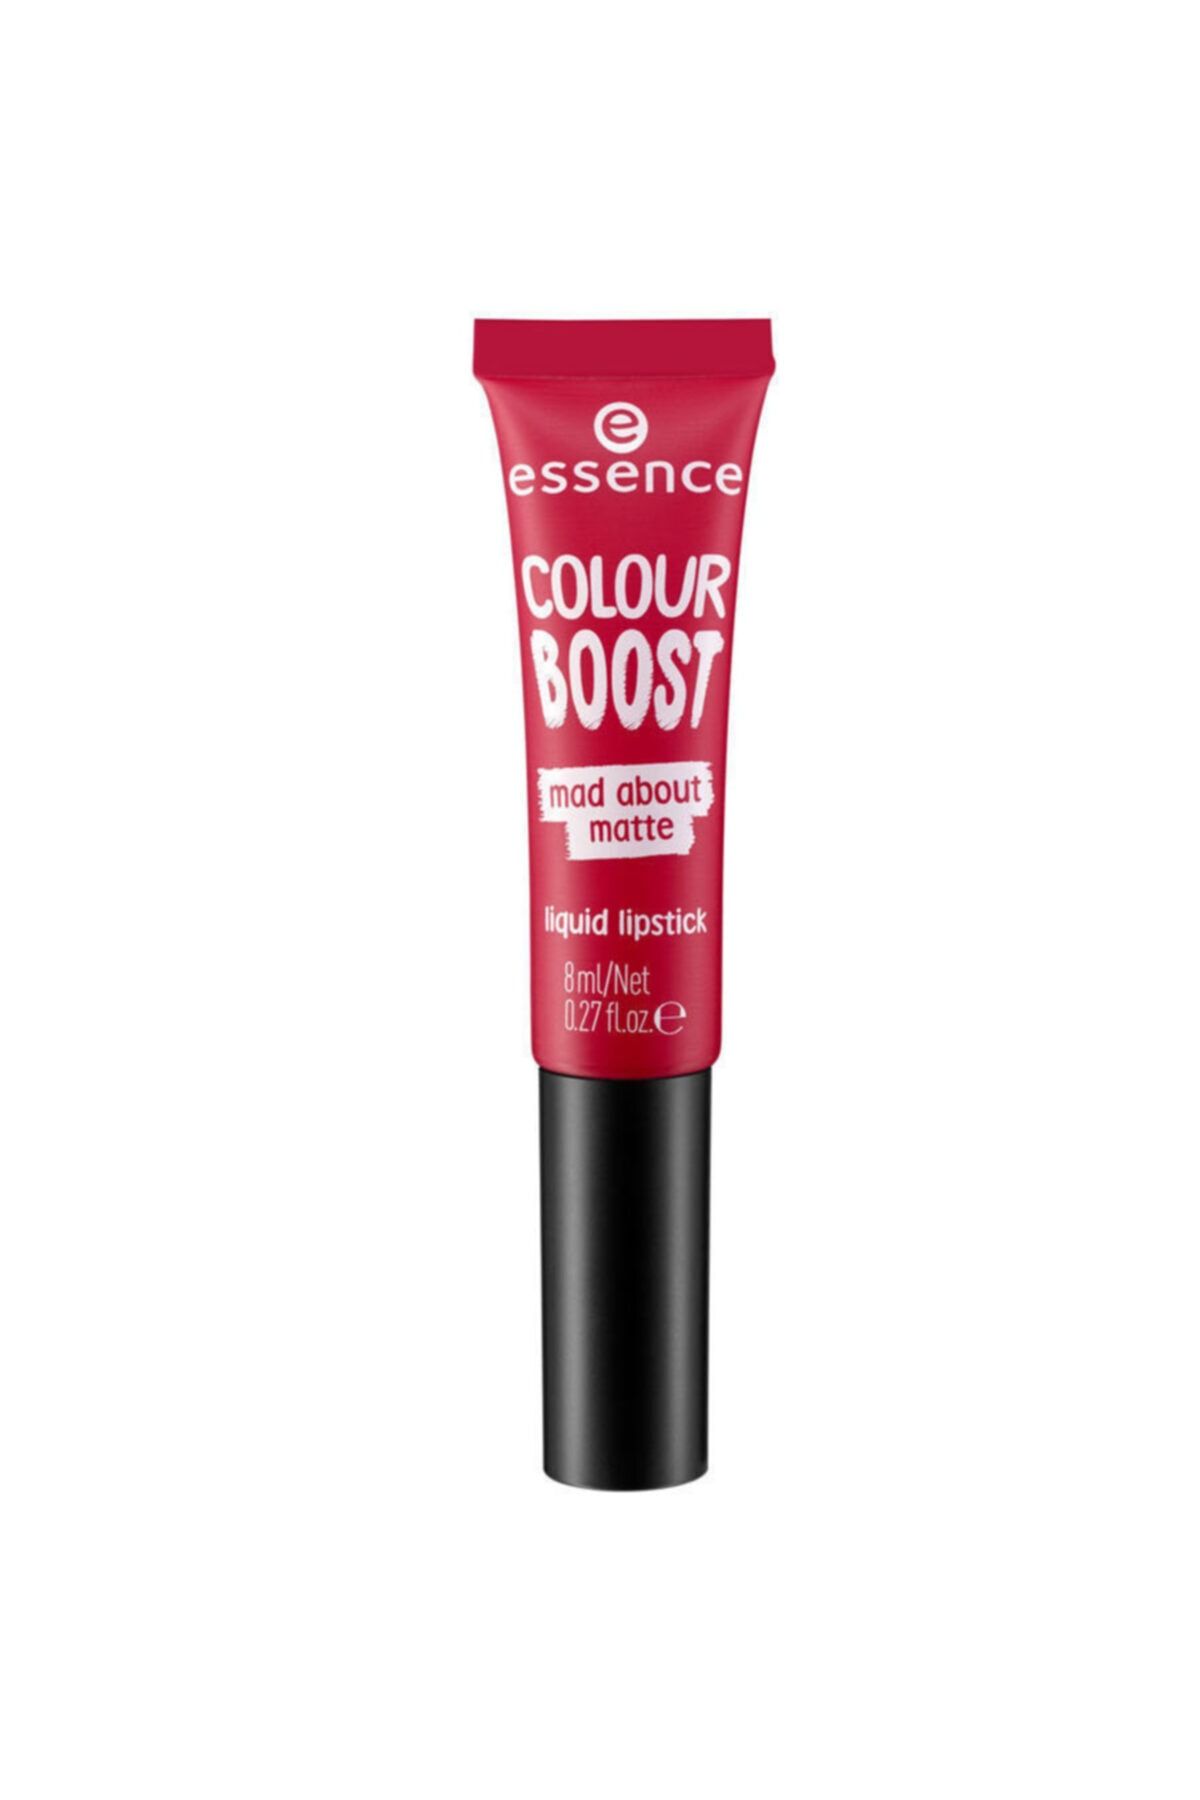 Essence Colour Boost Mad About Matte Likit Lipstick No 07